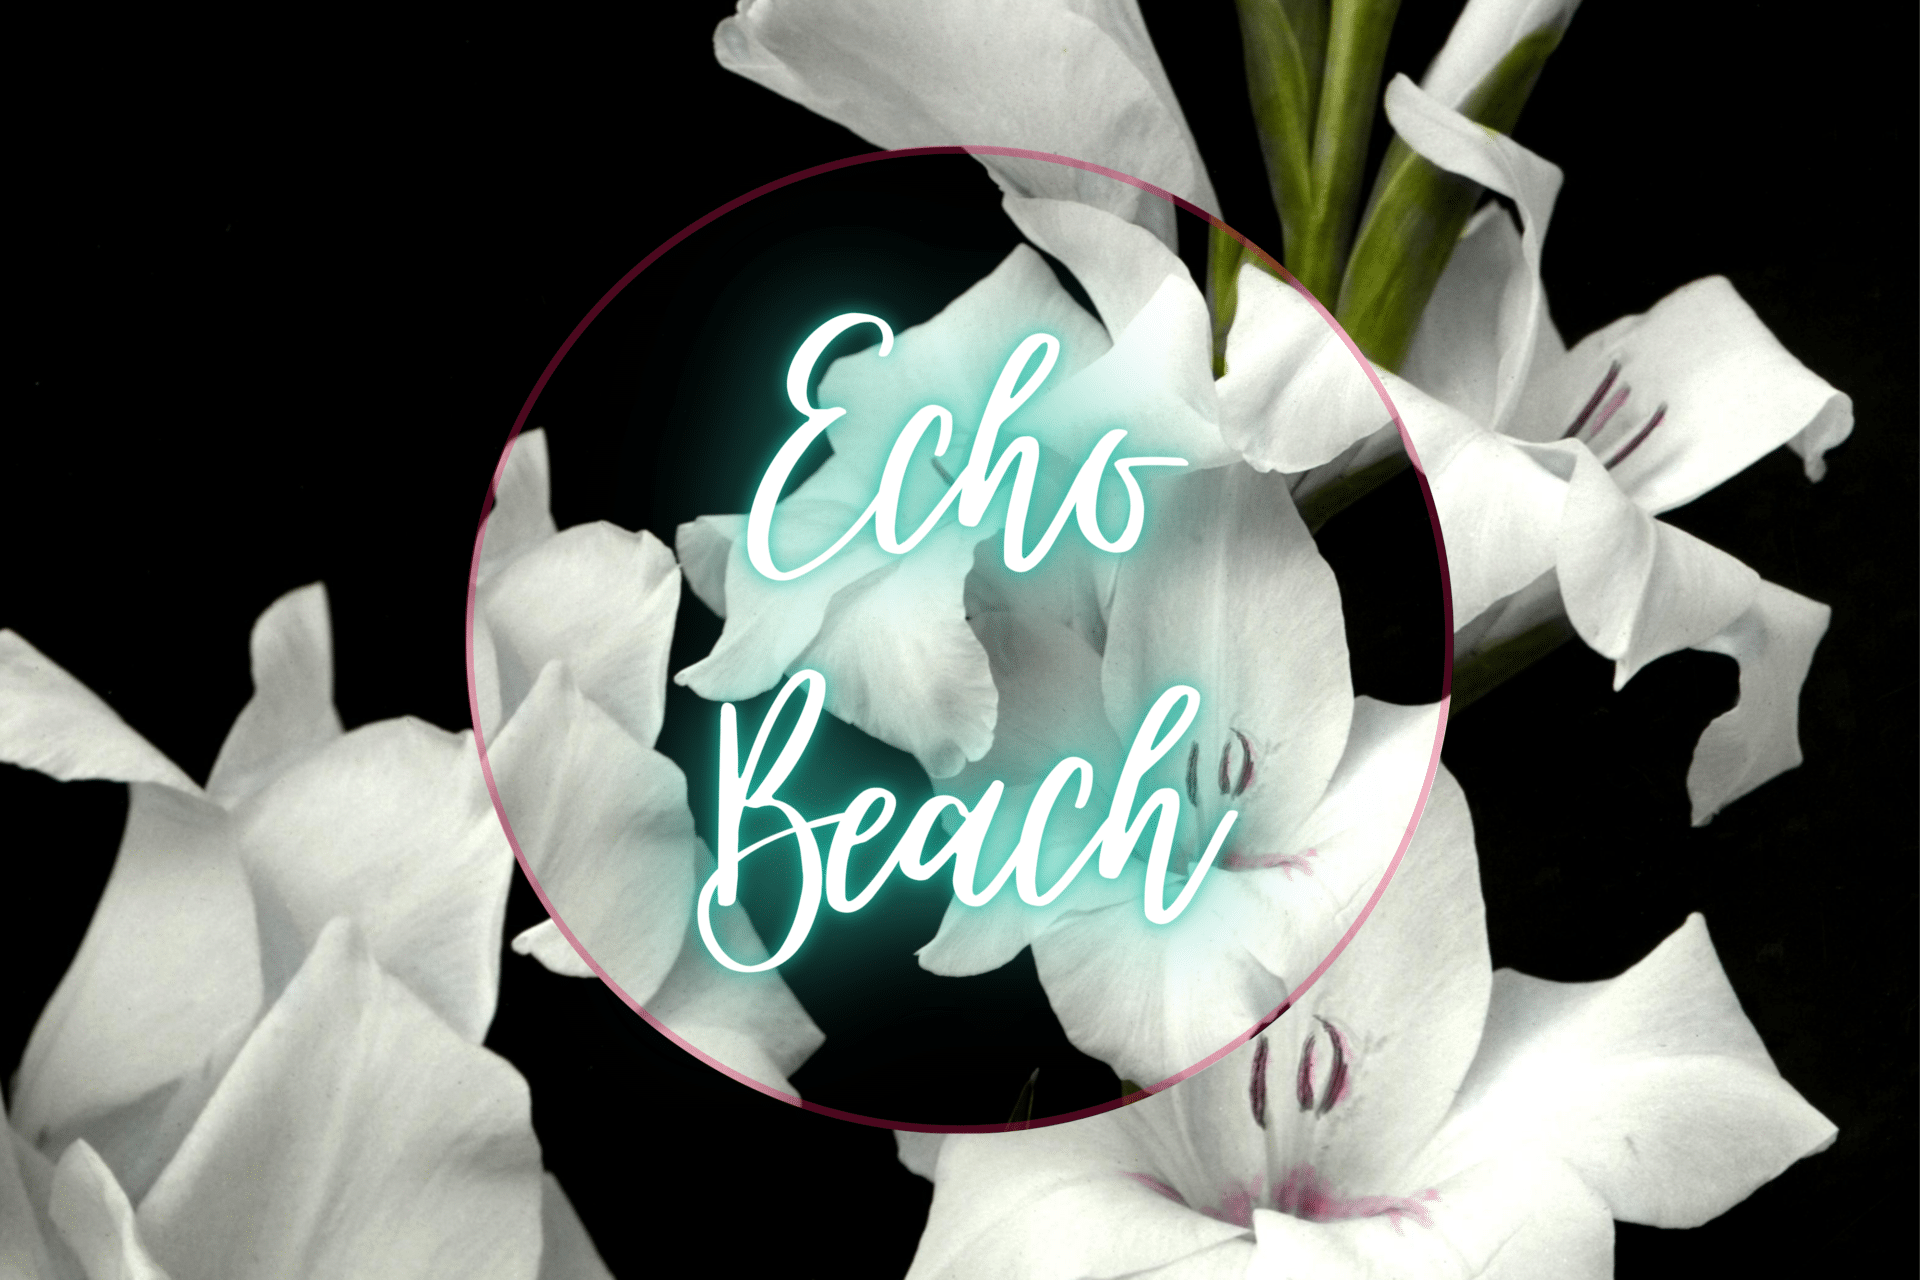 Echo Beach Show Image